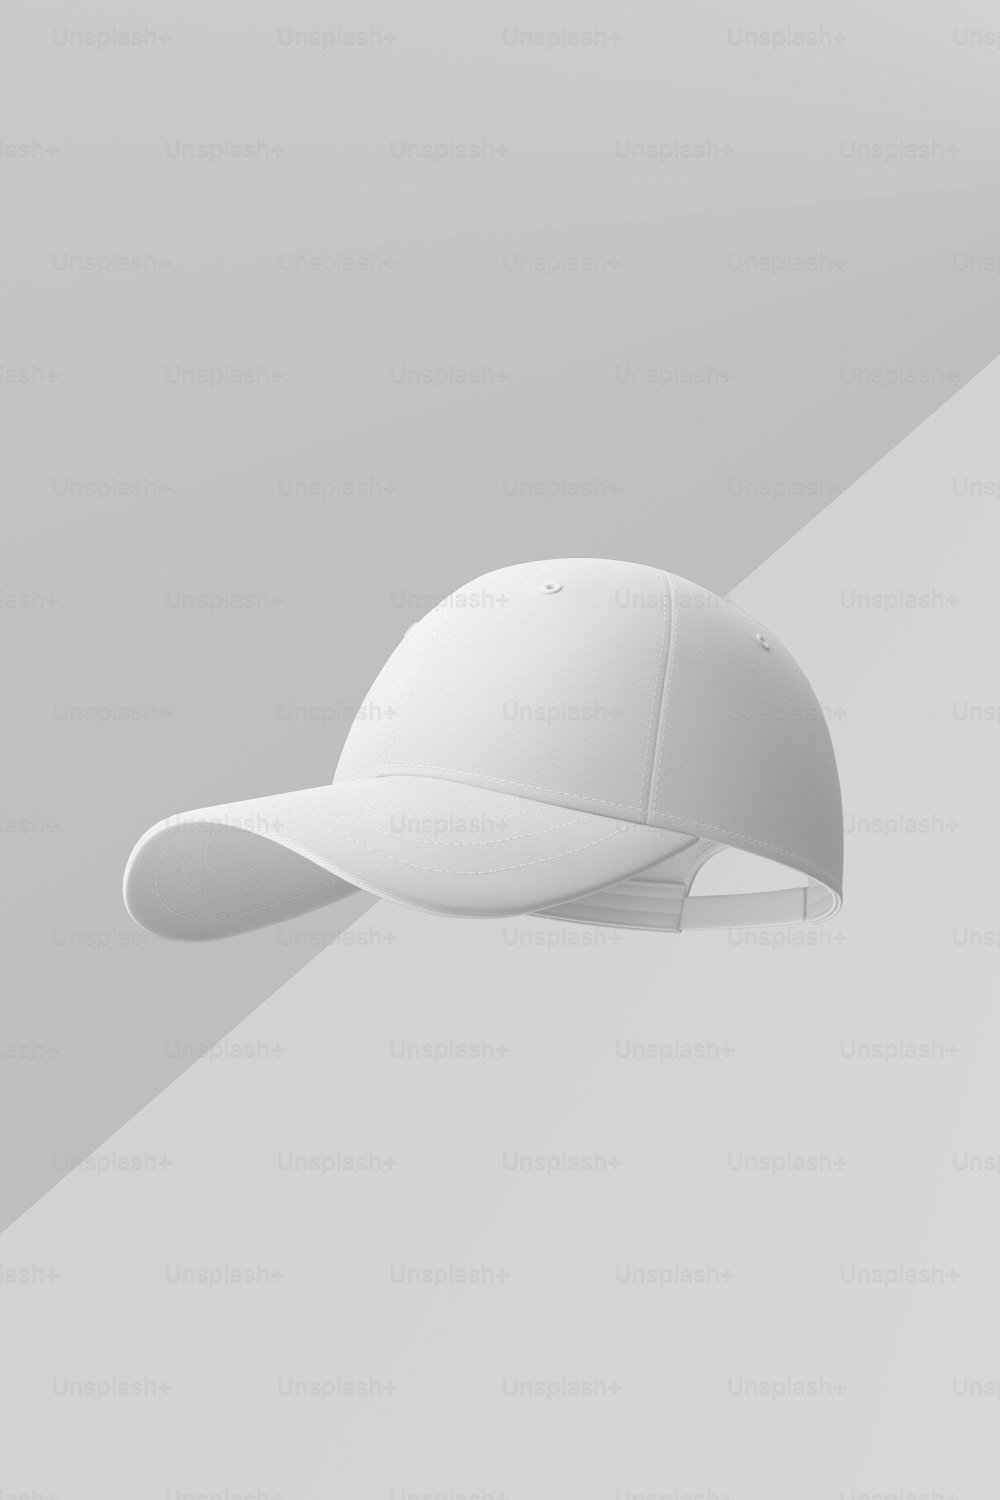 Una gorra de béisbol blanca sobre fondo gris